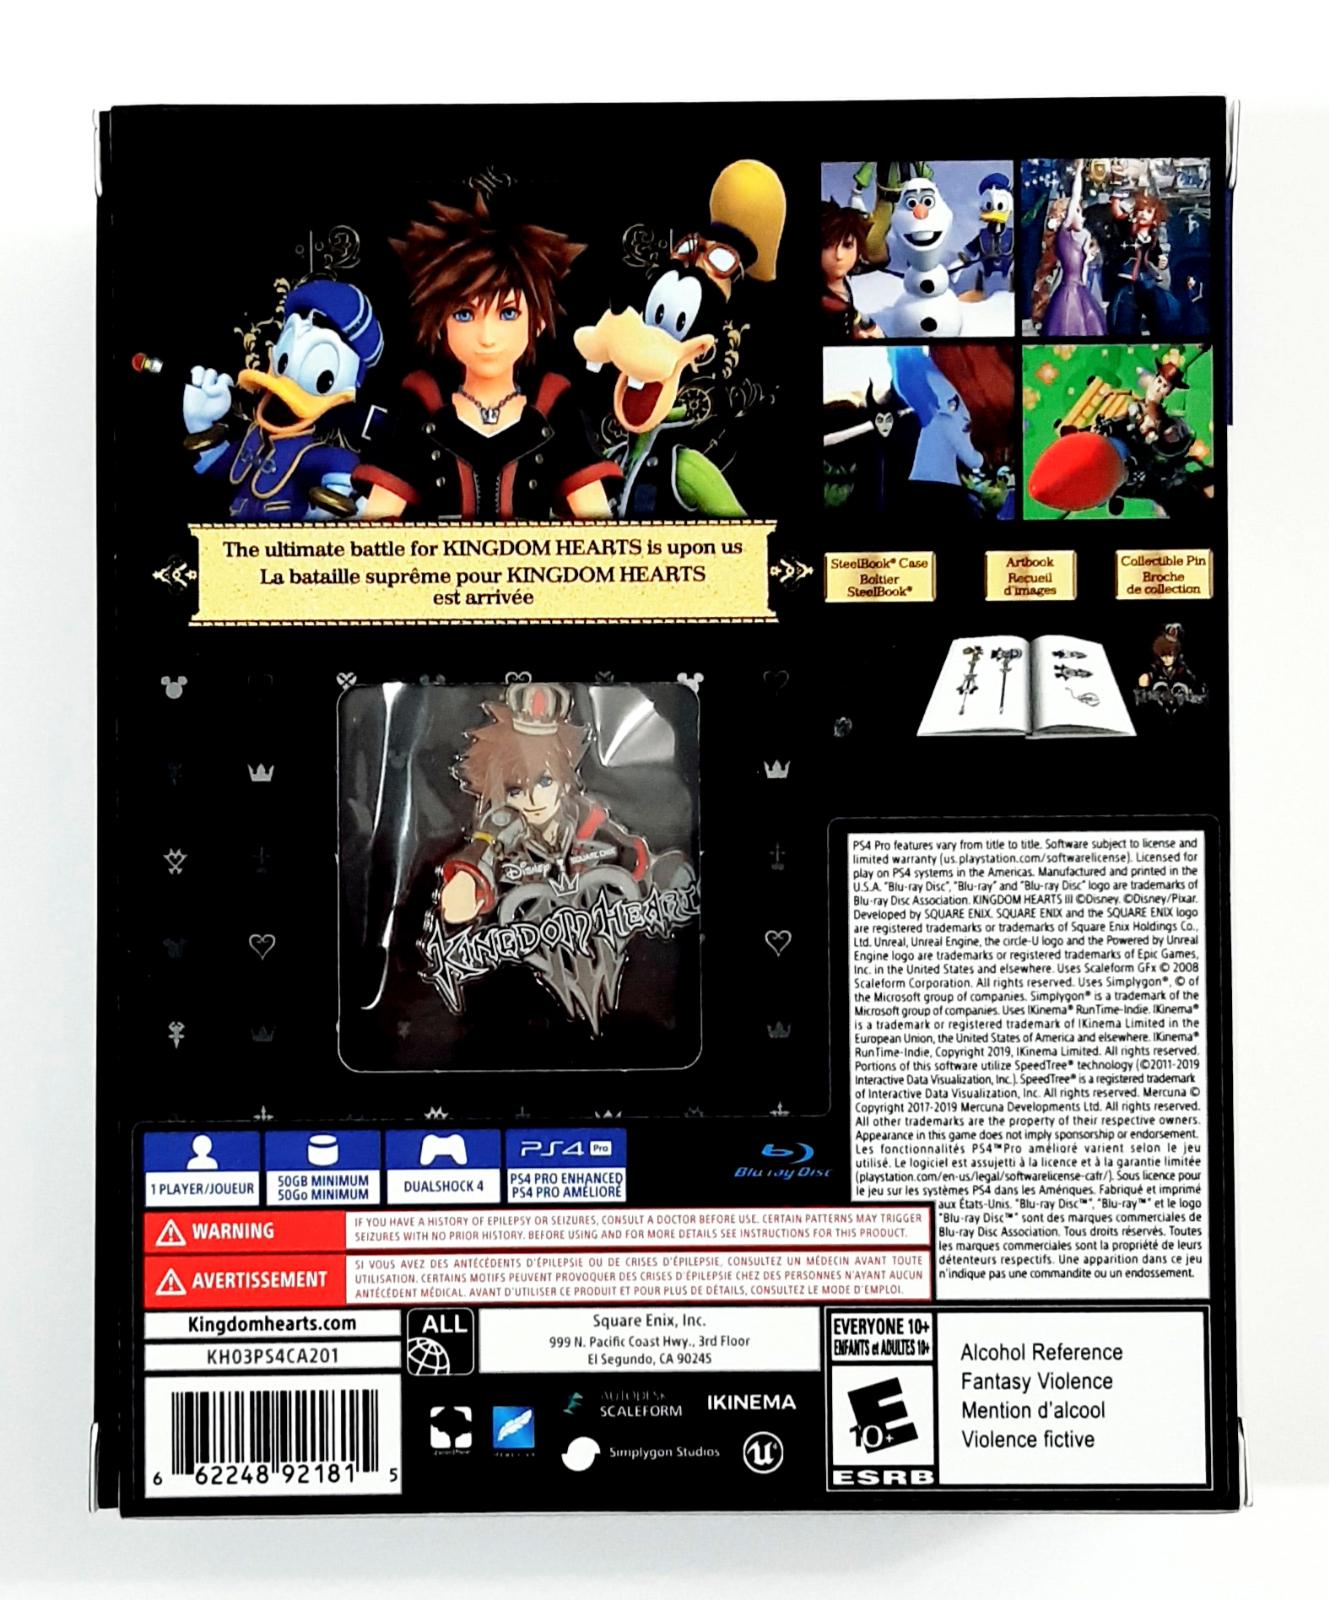 kingdom hearts iii 3 deluxe edition xbox one ps4 bring arts figures set (3)